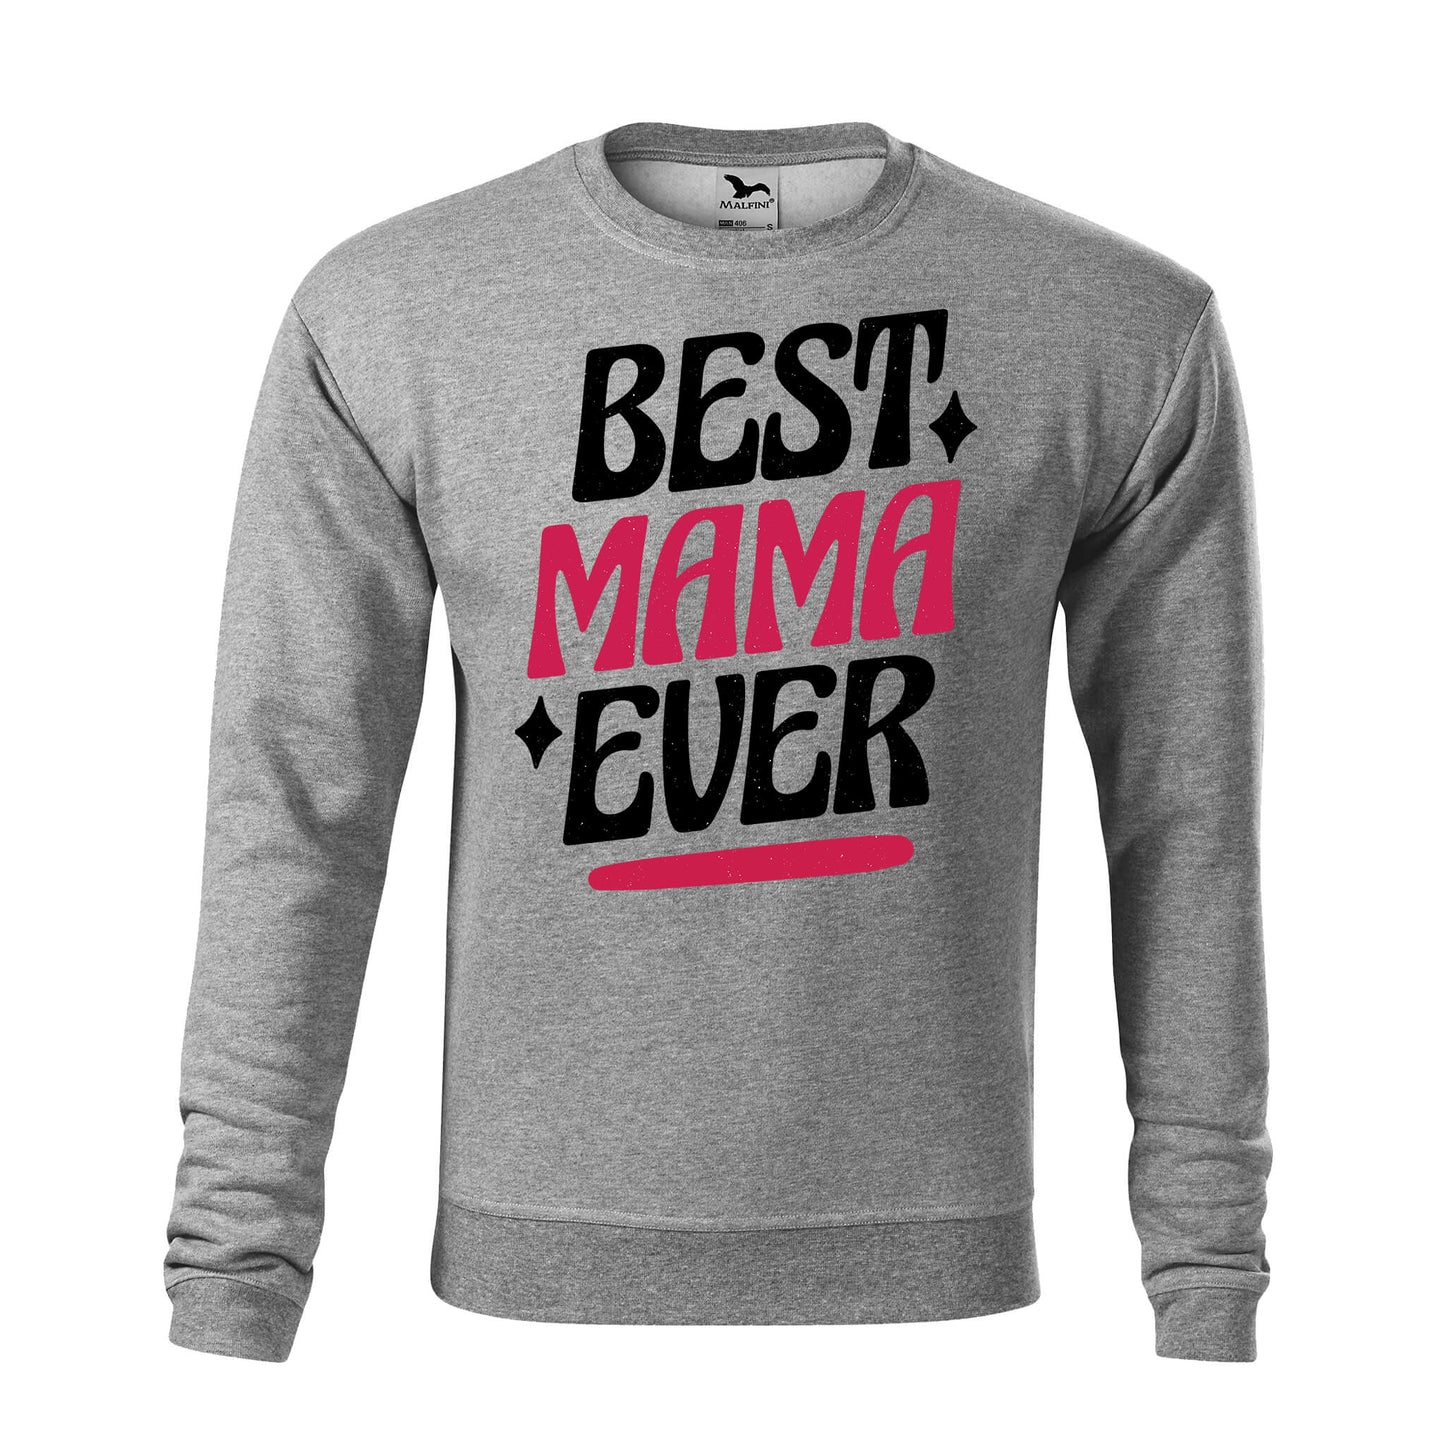 Best mama ever sweatshirt - rvdesignprint